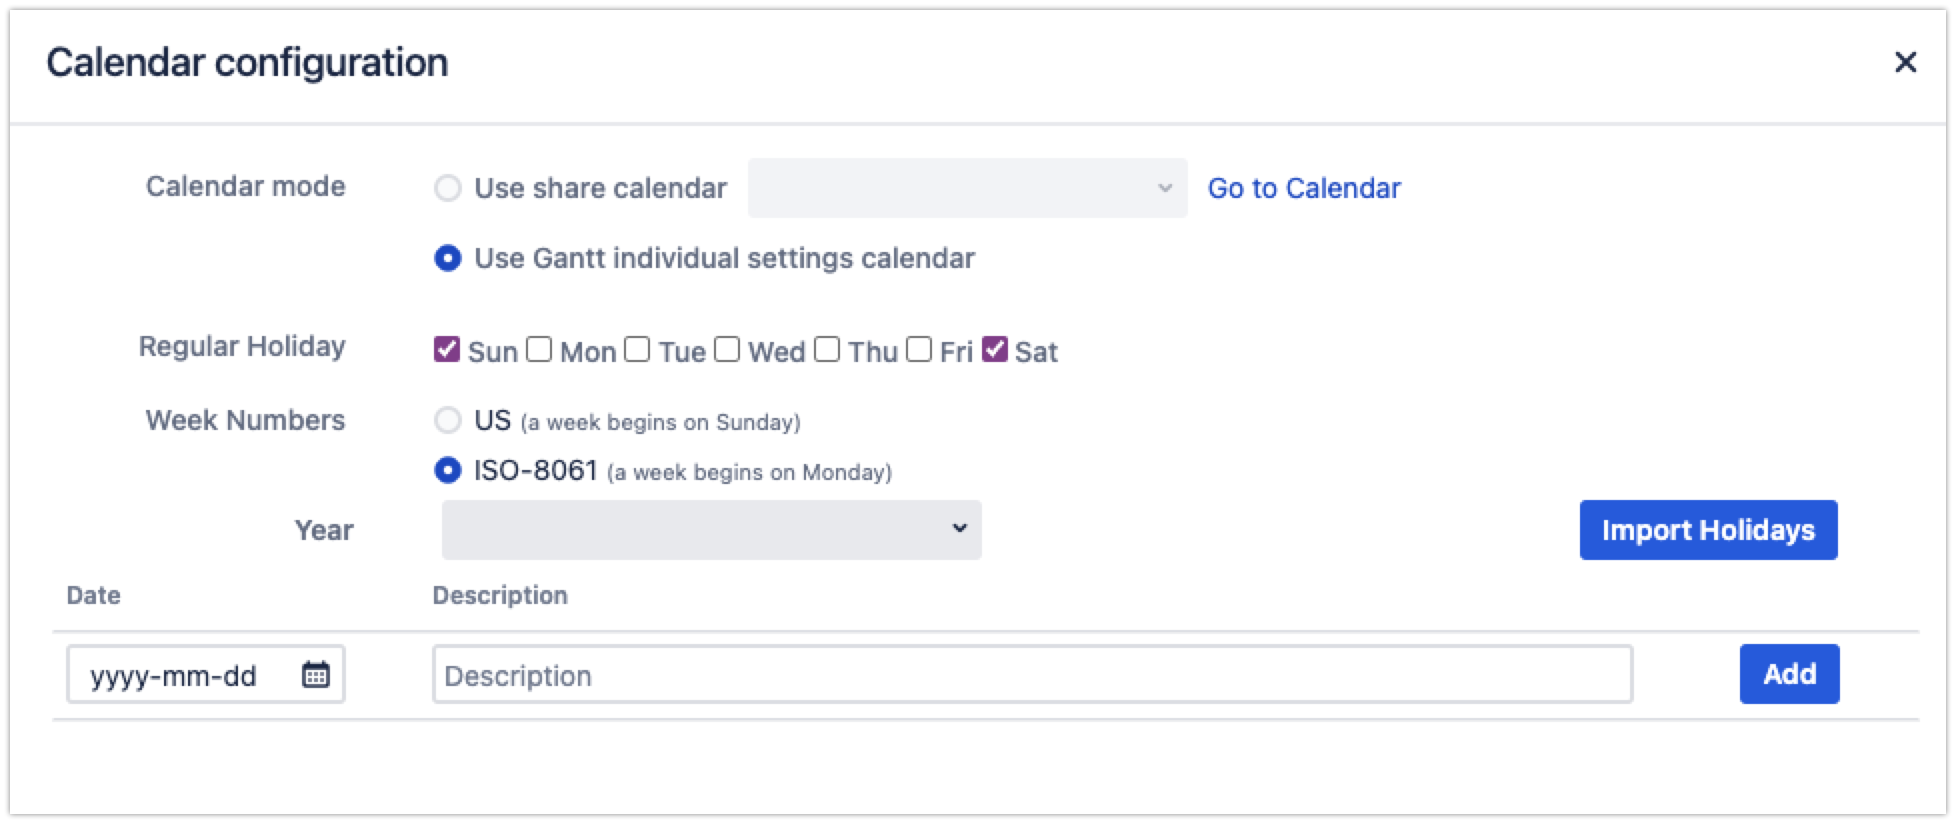 A screenshot displaying the calendar configuration where you can edit the working calendar.